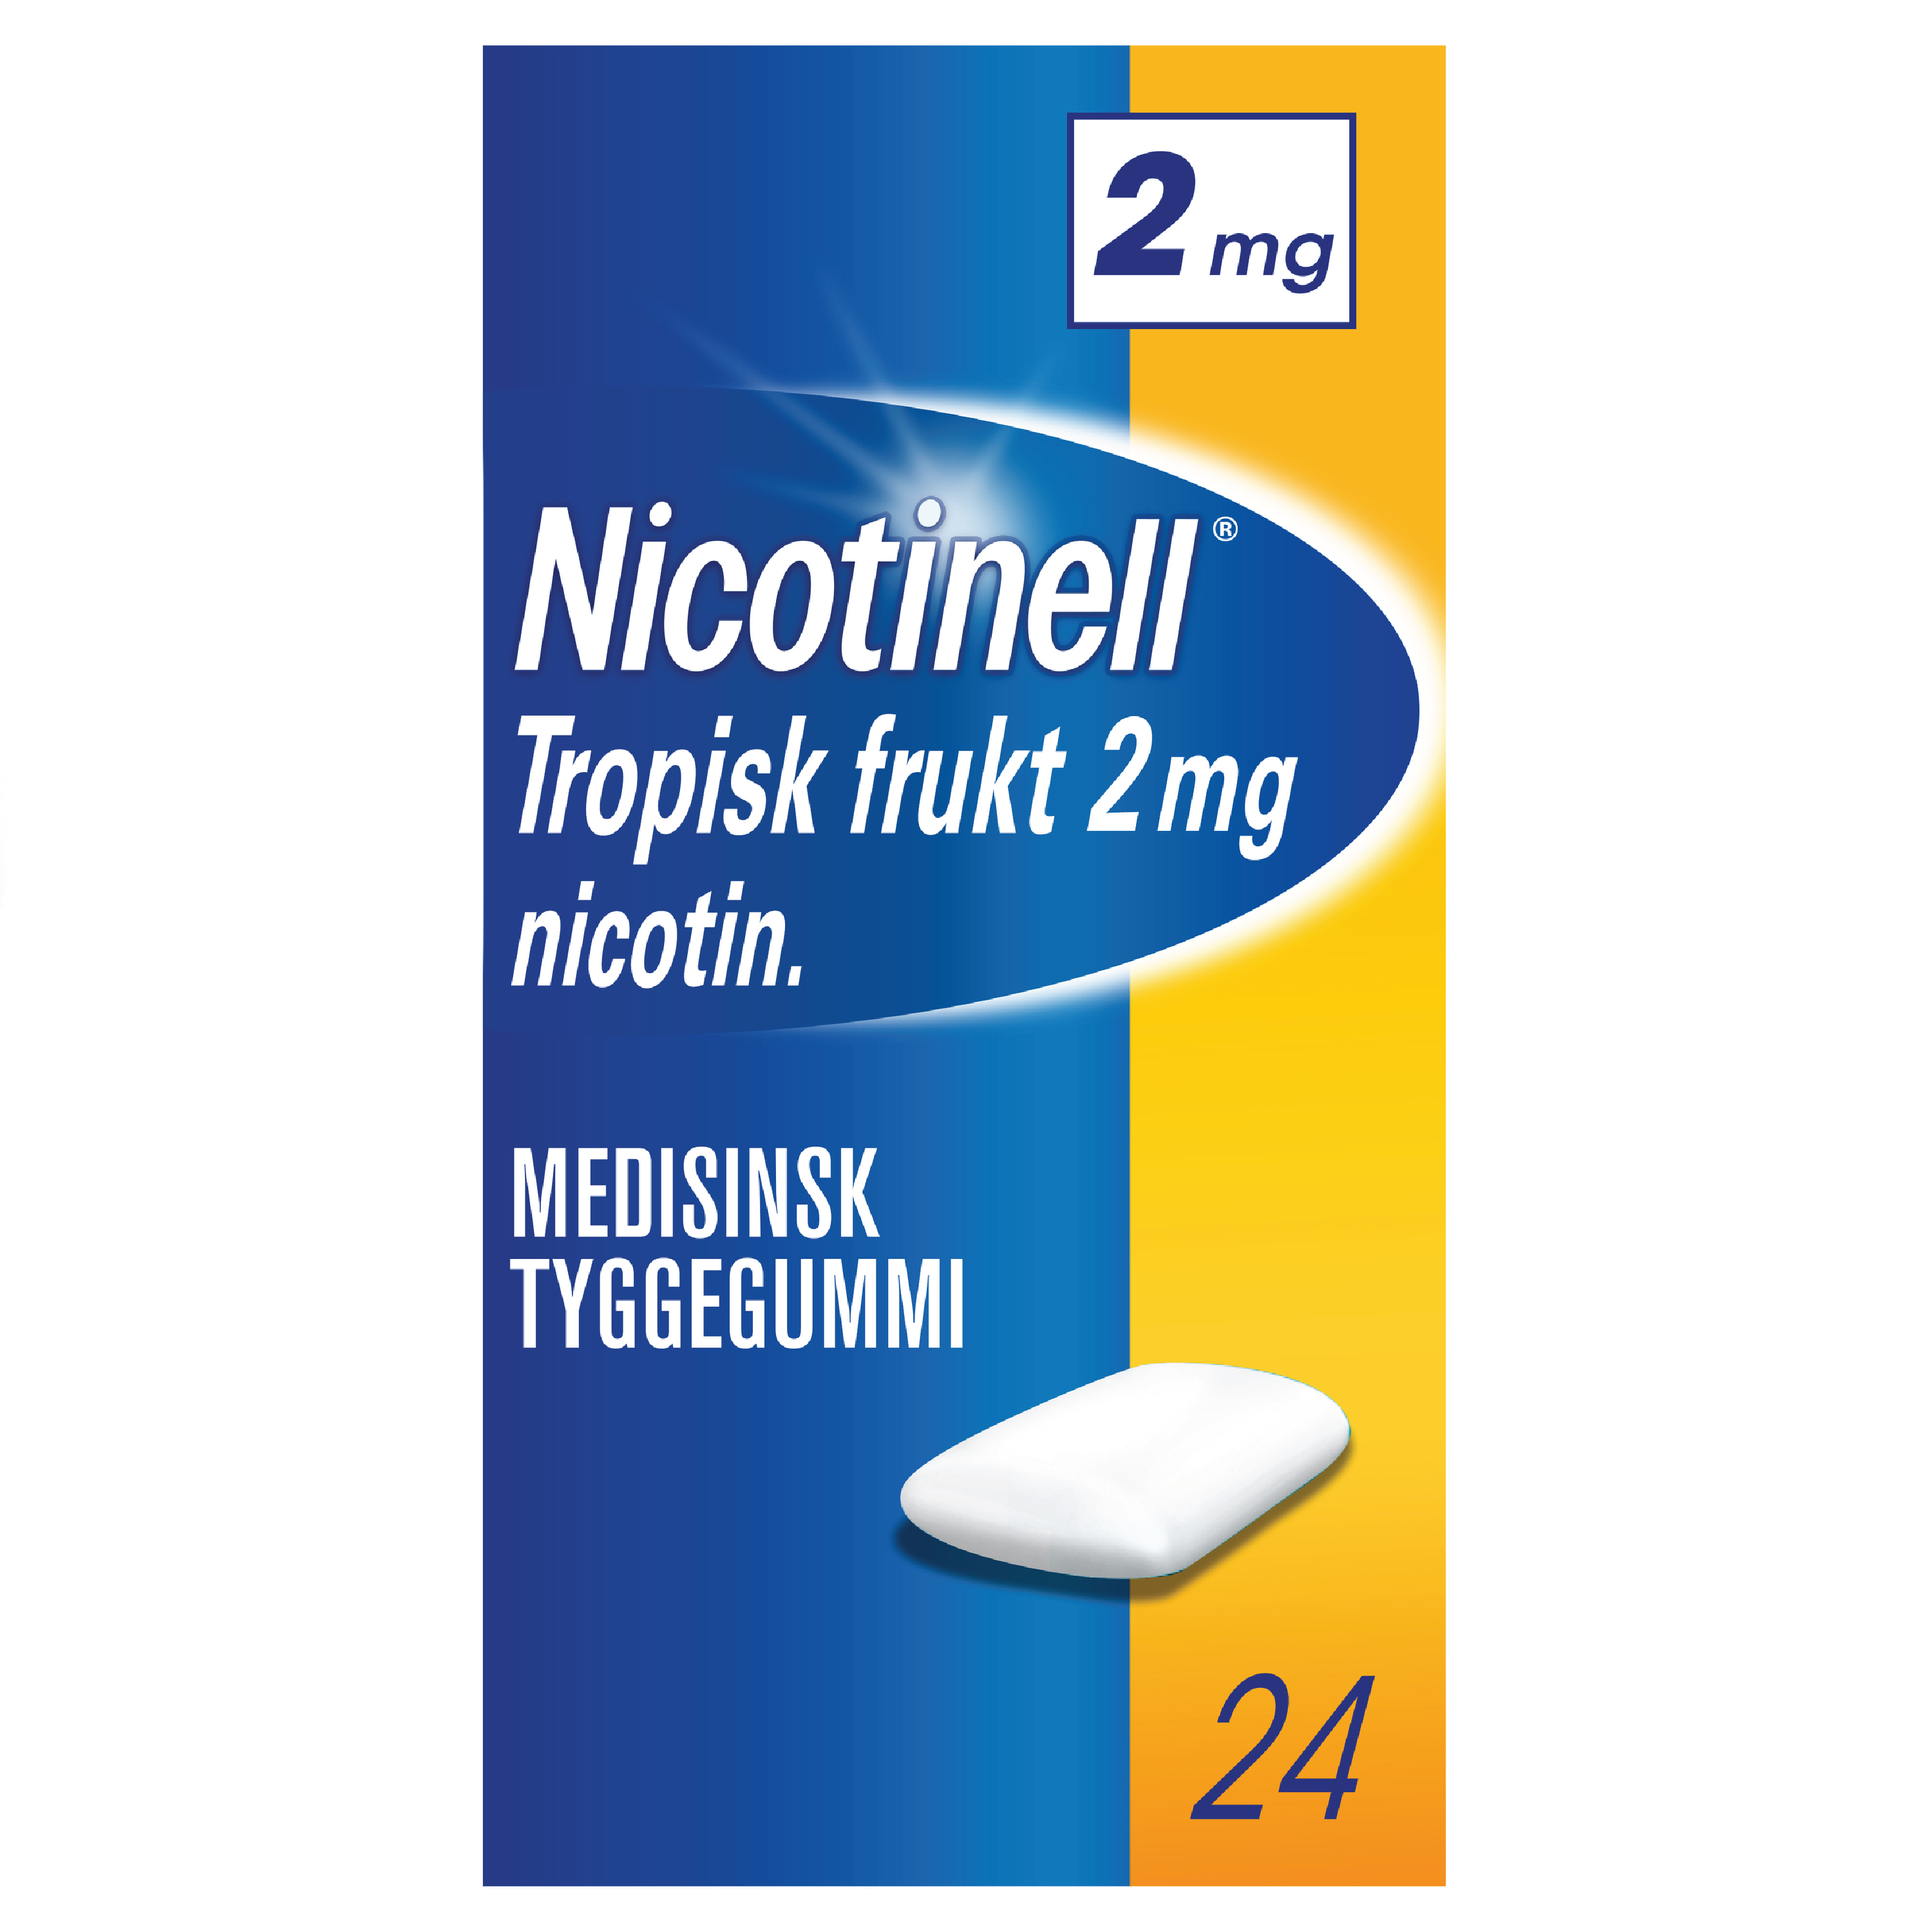 Nicotinell Tyggegummi 2mg tropisk frukt, 24 stk.